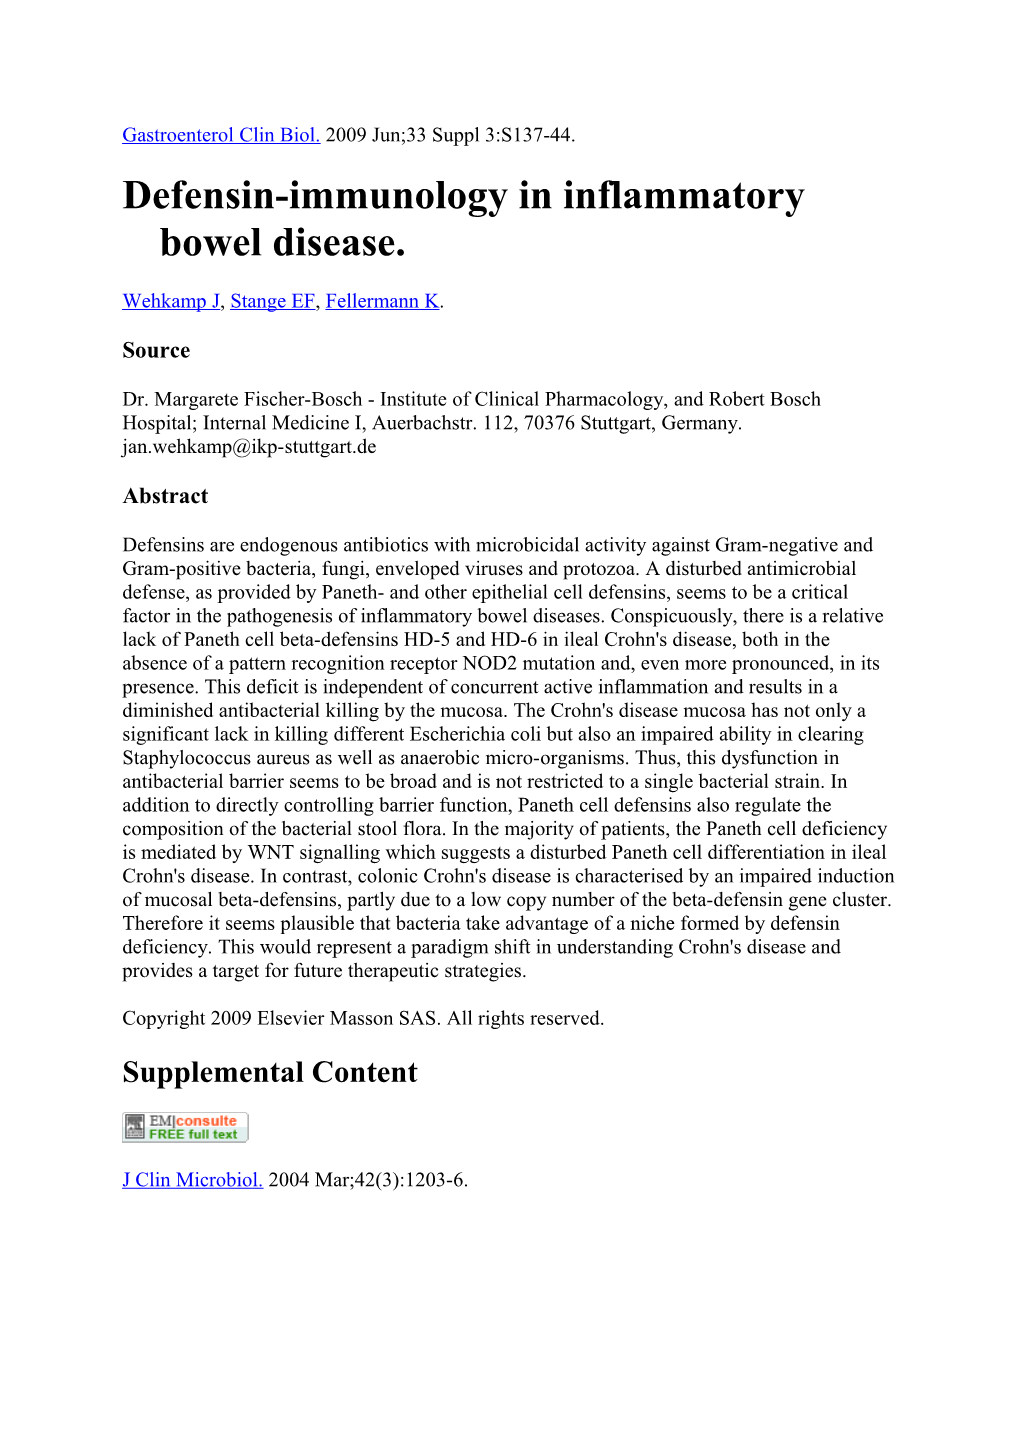 Defensin-Immunology in Inflammatory Bowel Disease